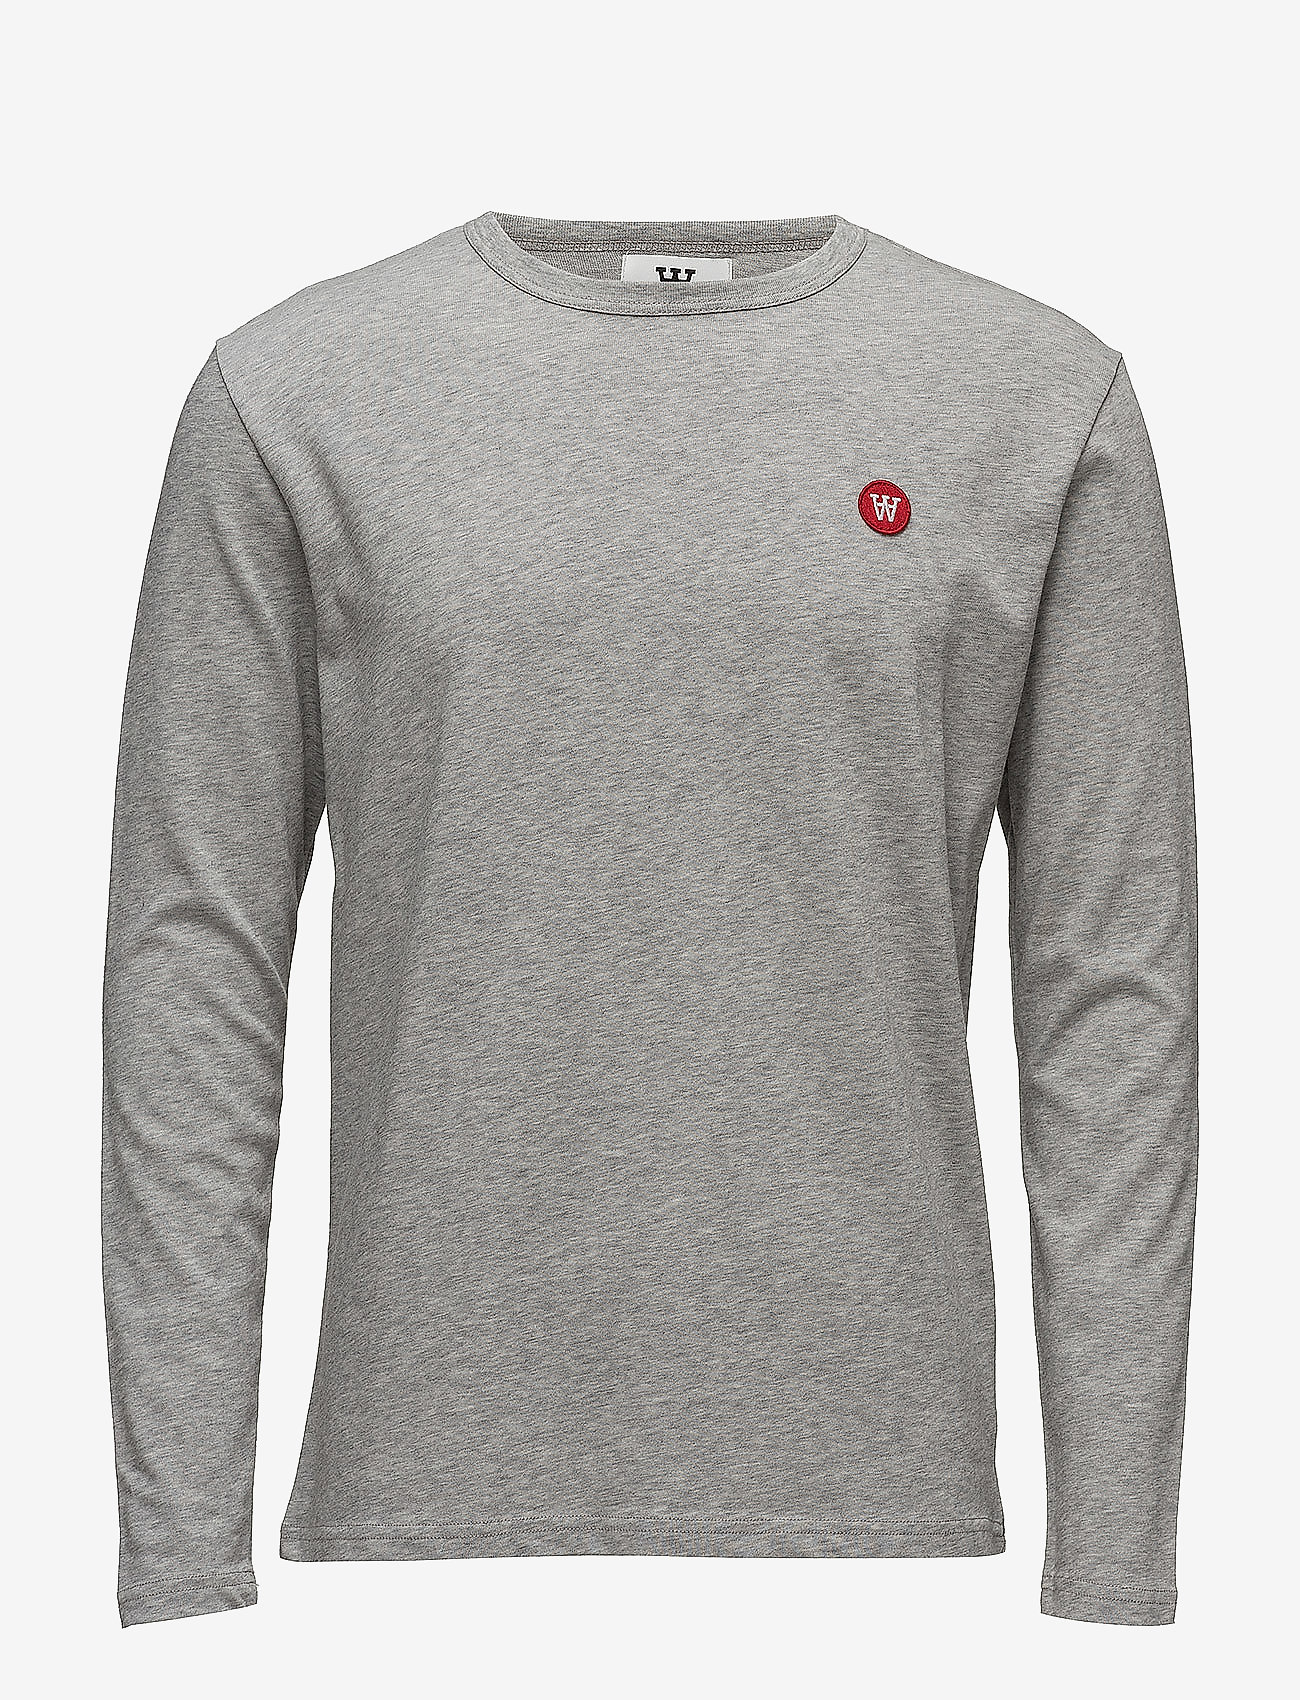 Double A by Wood Wood - Mel long sleeve - langærmede t-shirts - grey melange - 0